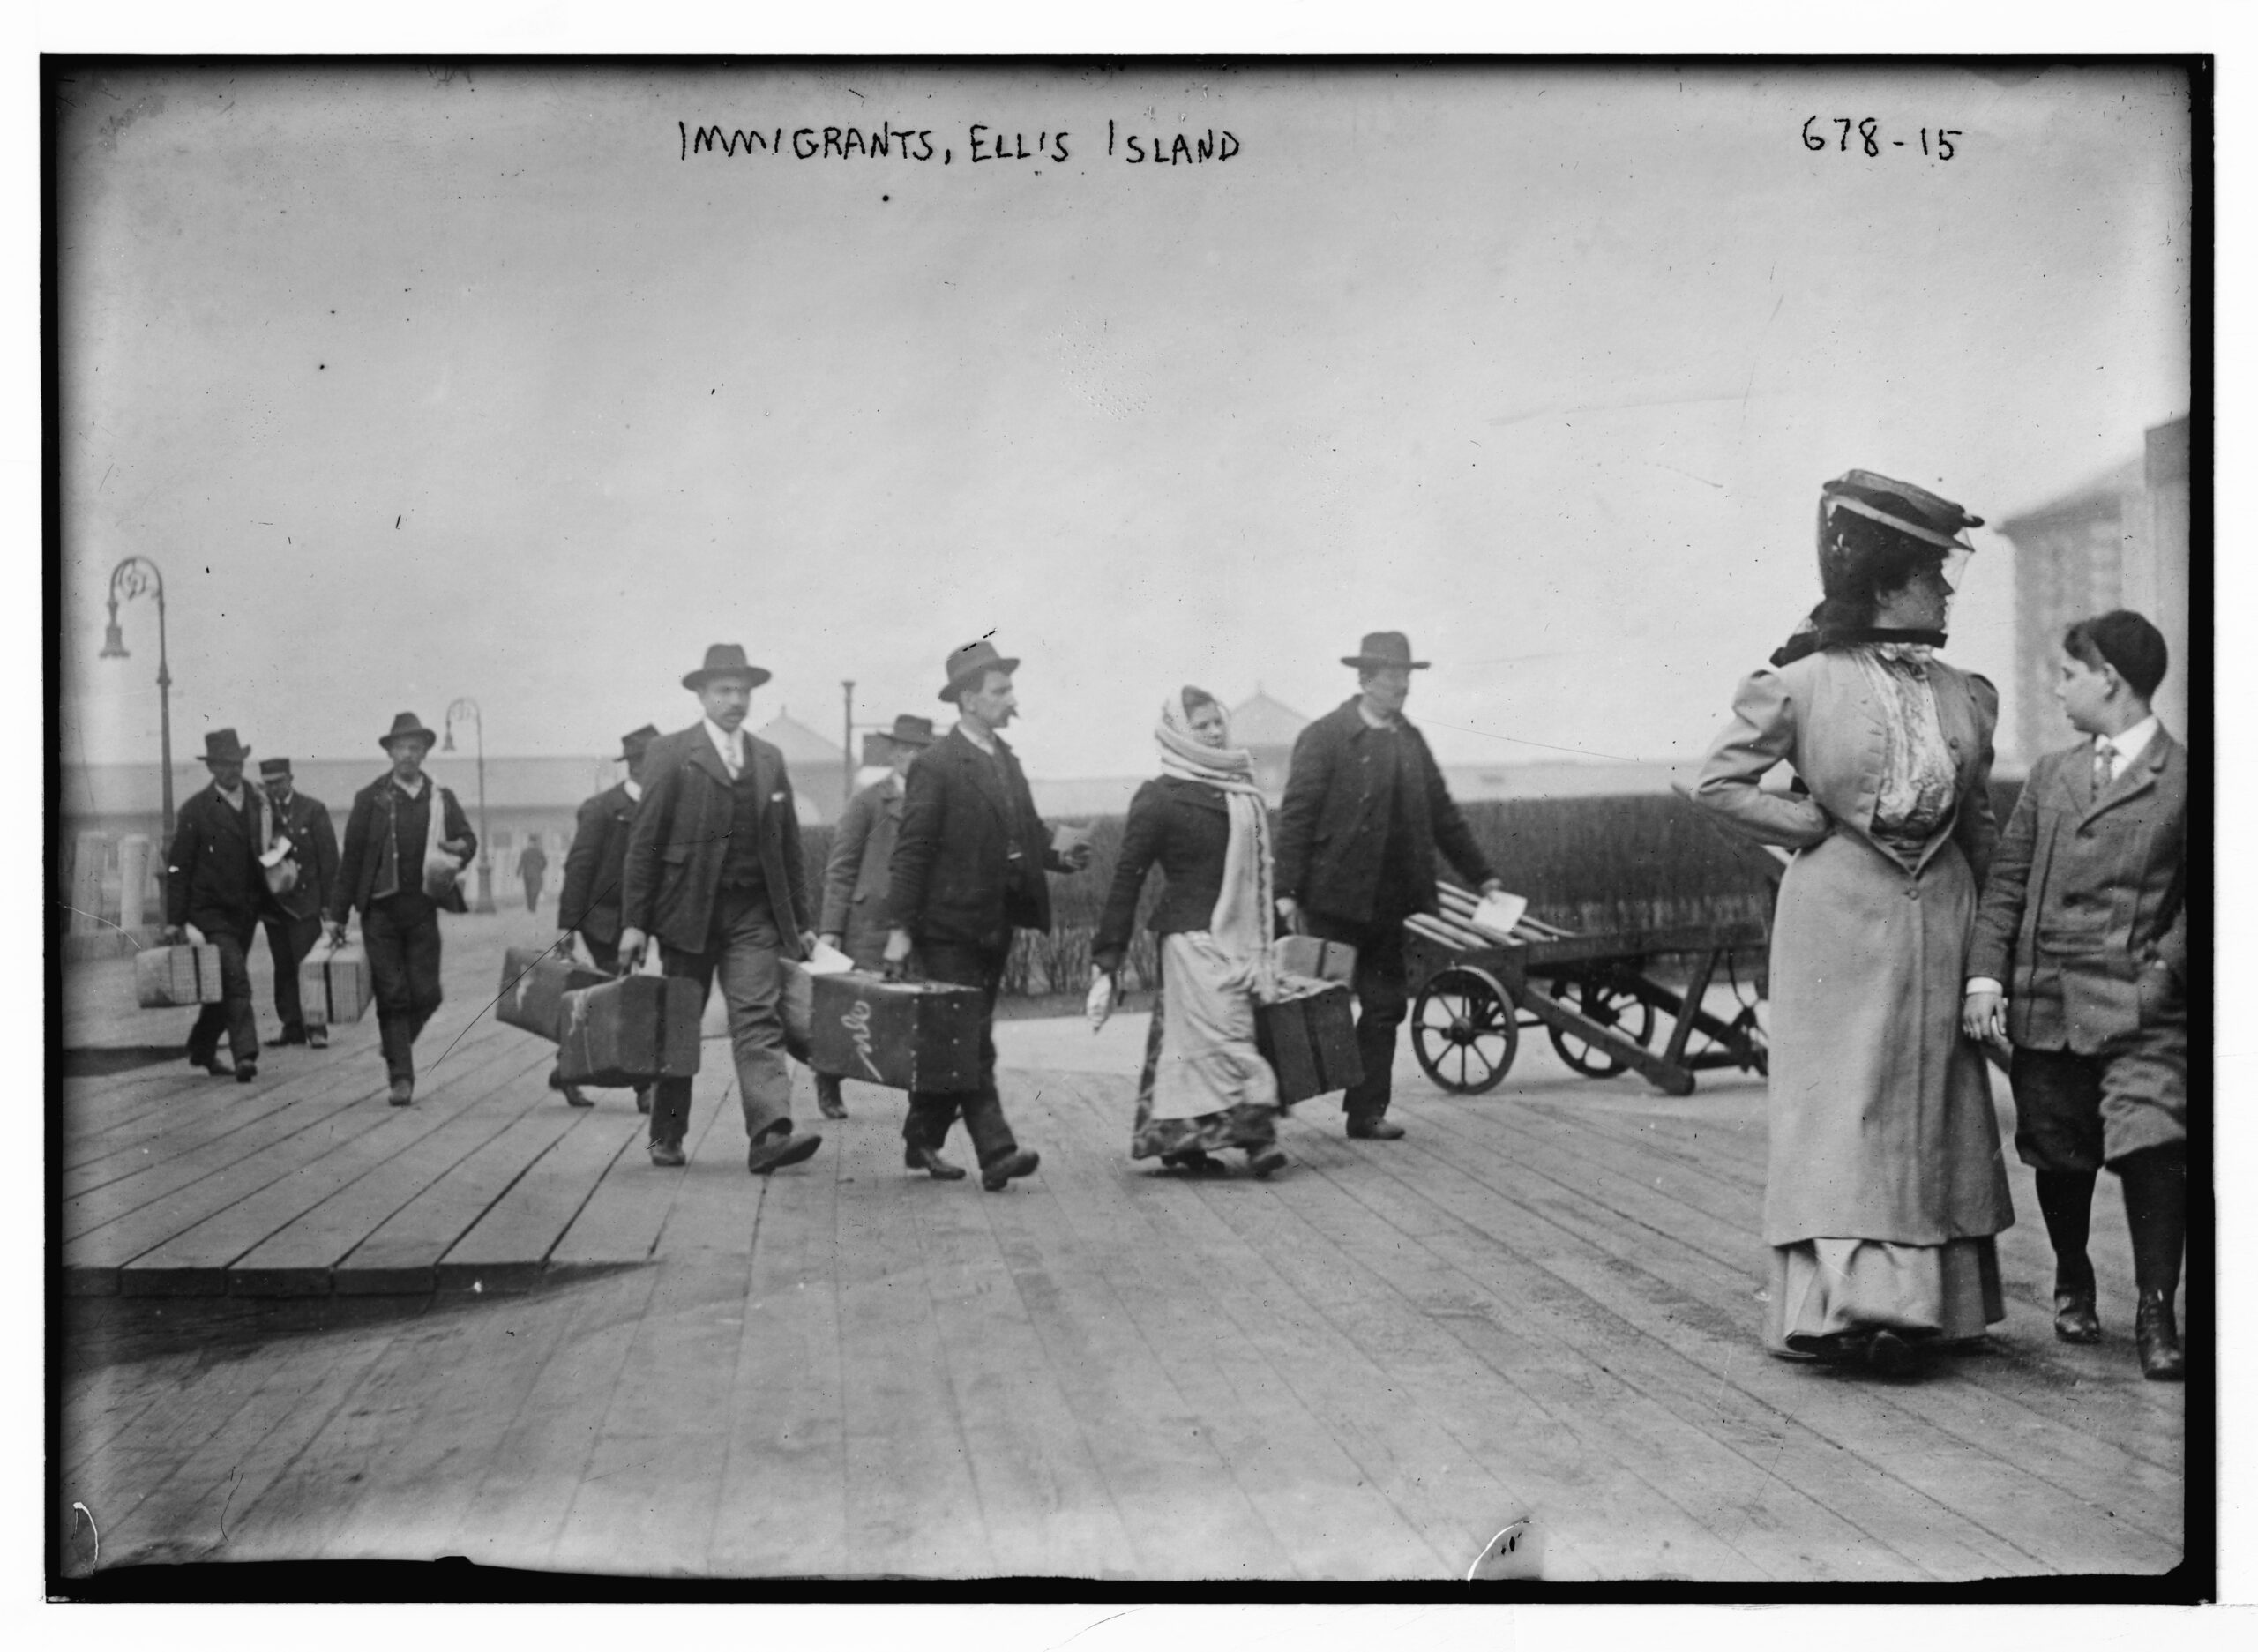 Immigrants Carrying Luggage on Ellis Island